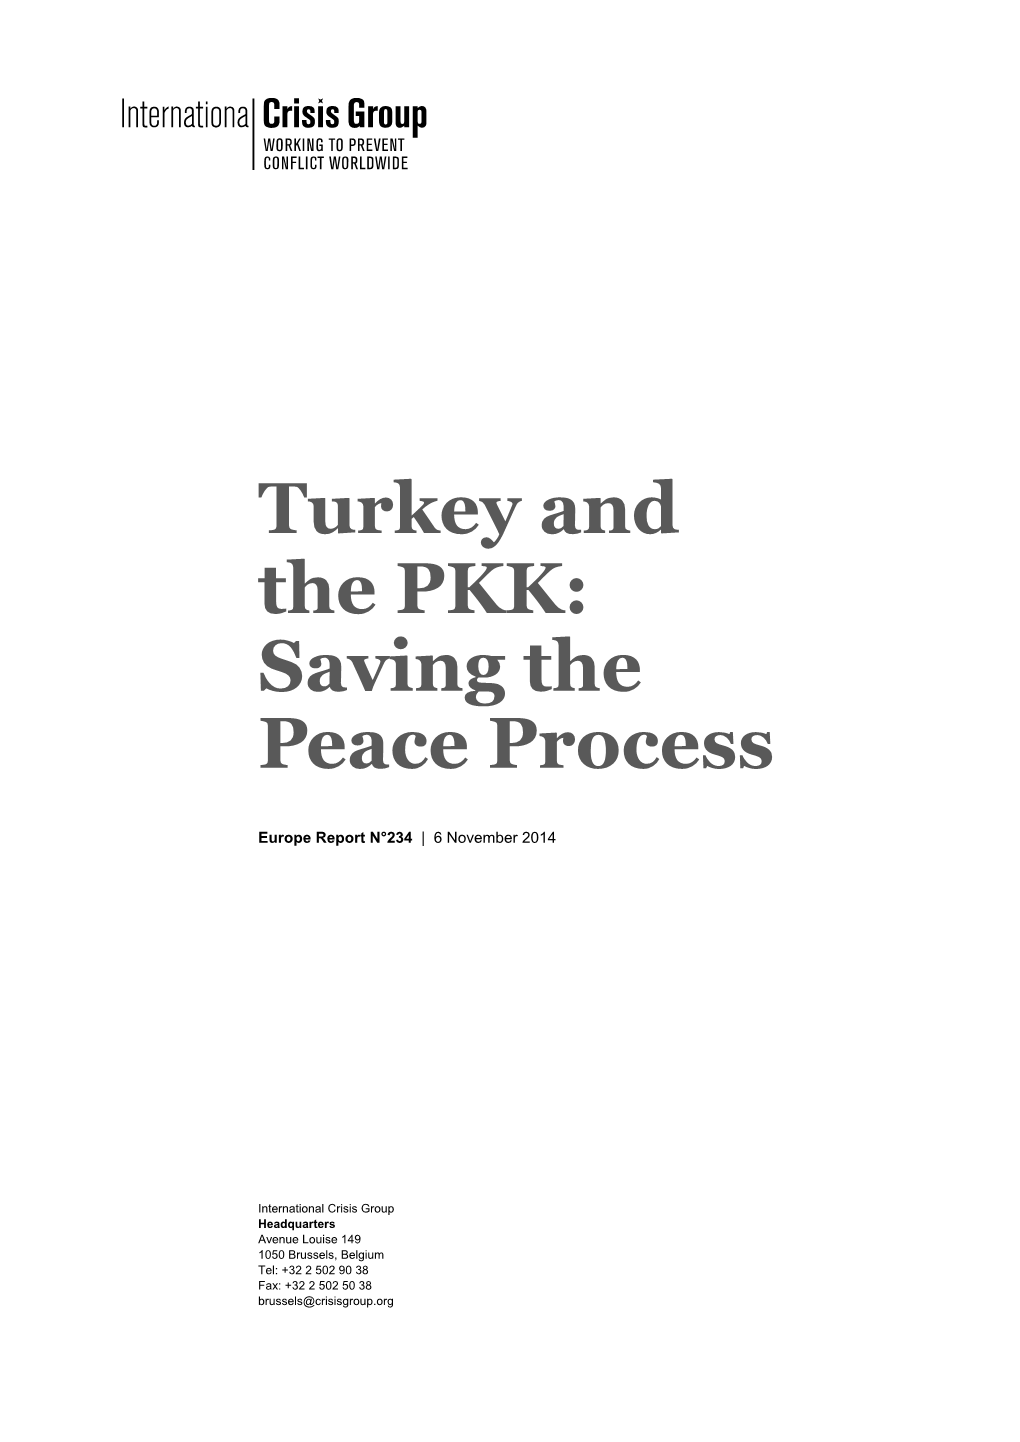 Turkey and the PKK: Saving the Peace Process